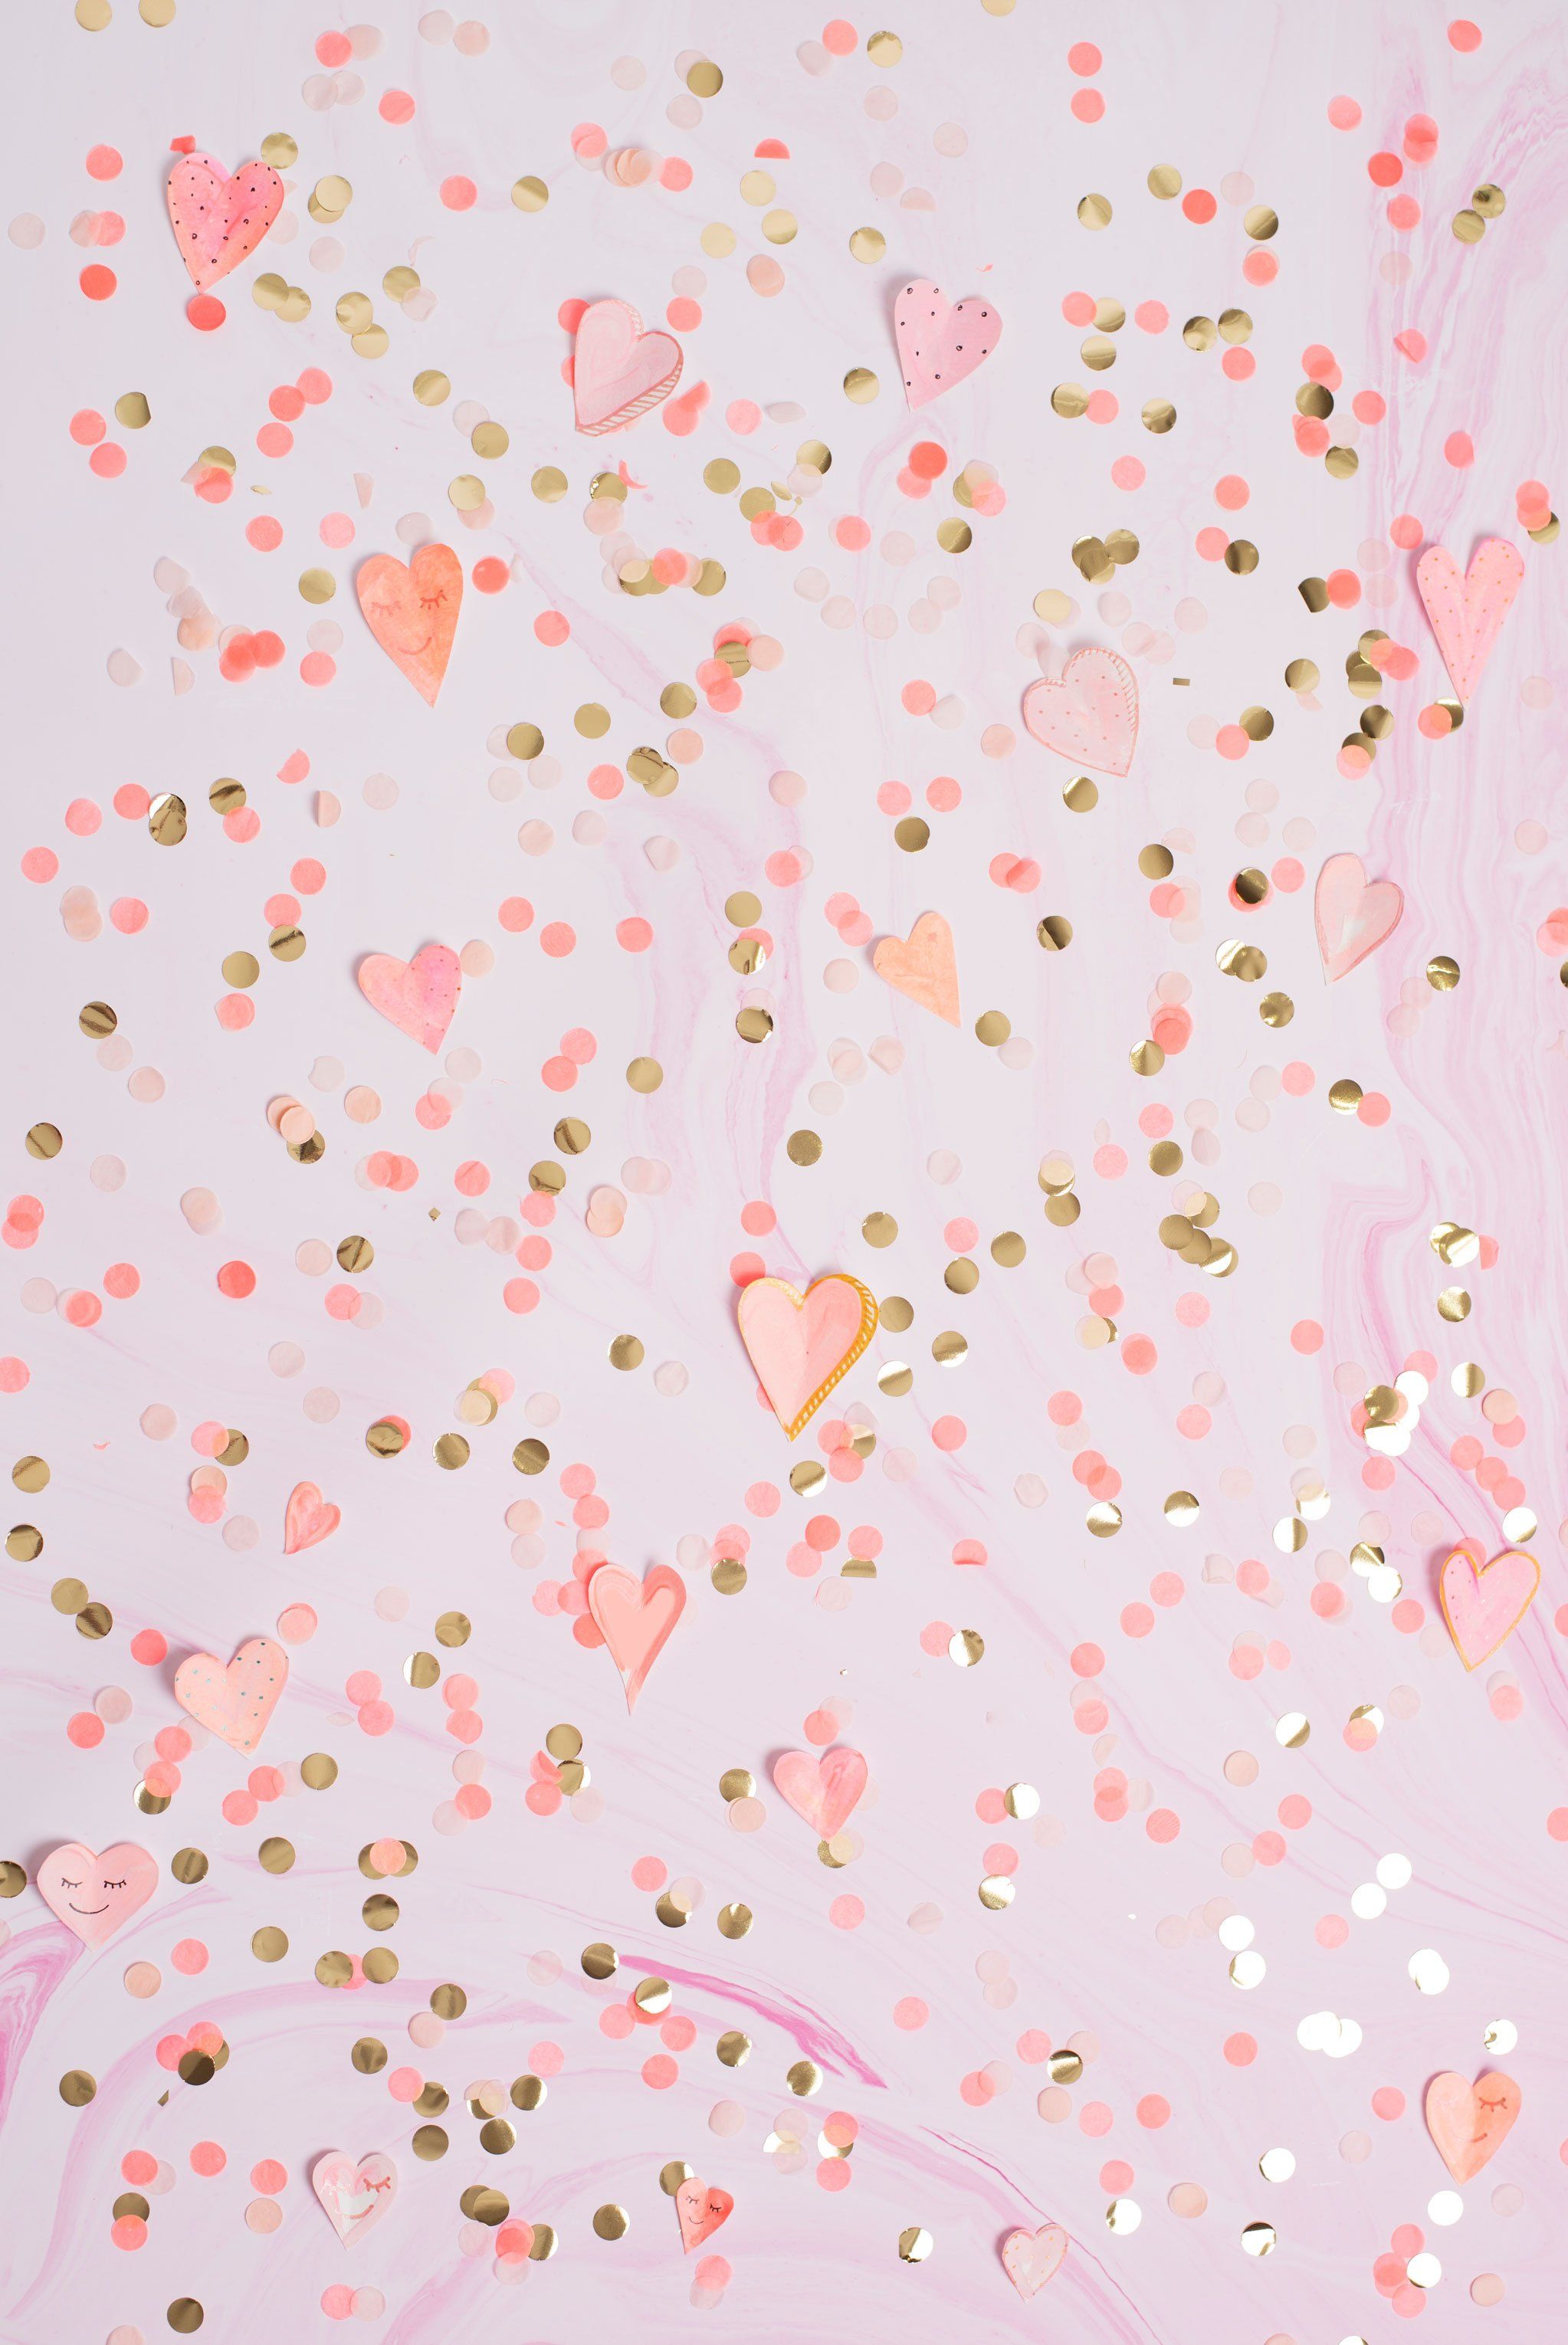  Konfetti Hintergrundbild 2046x3060. Heart Confetti Photo Backdrop. Valentine, Instagram, Decoration